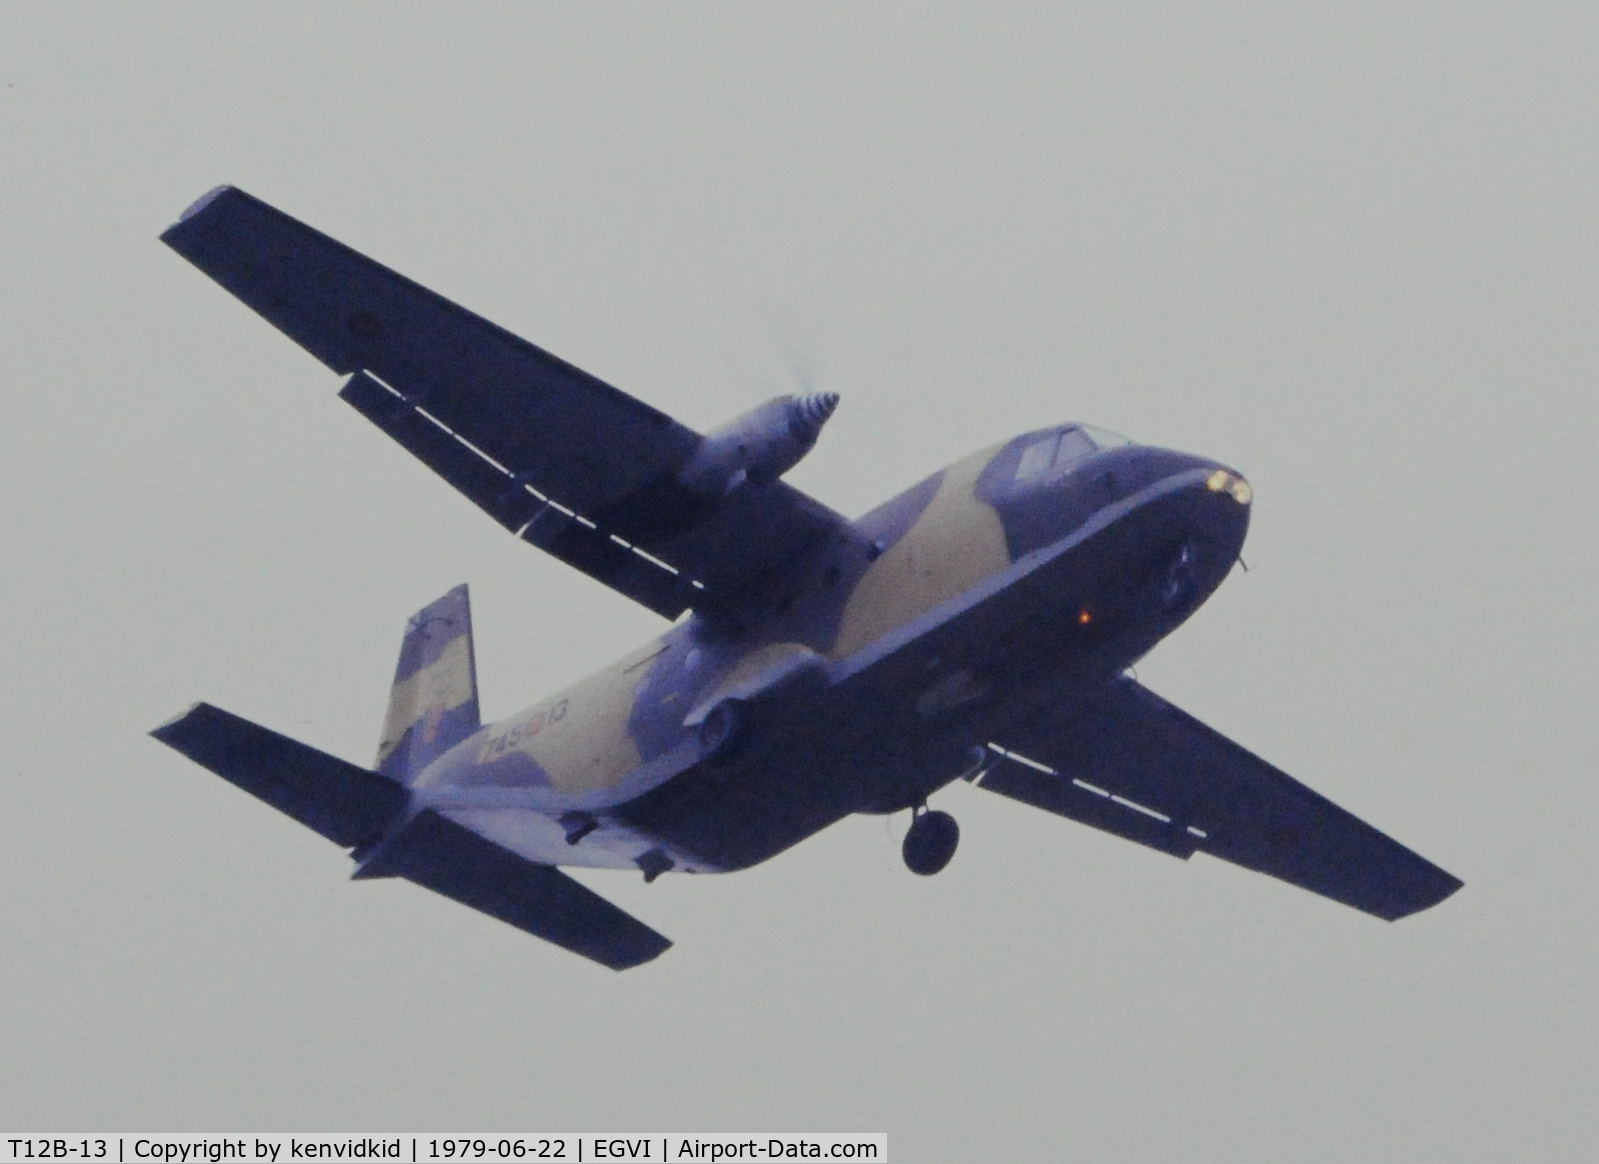 T12B-13, CASA C-212-100 Aviocar C/N A1-9-19, At the 1979 International Air Tattoo Greenham Common, copied from slide.